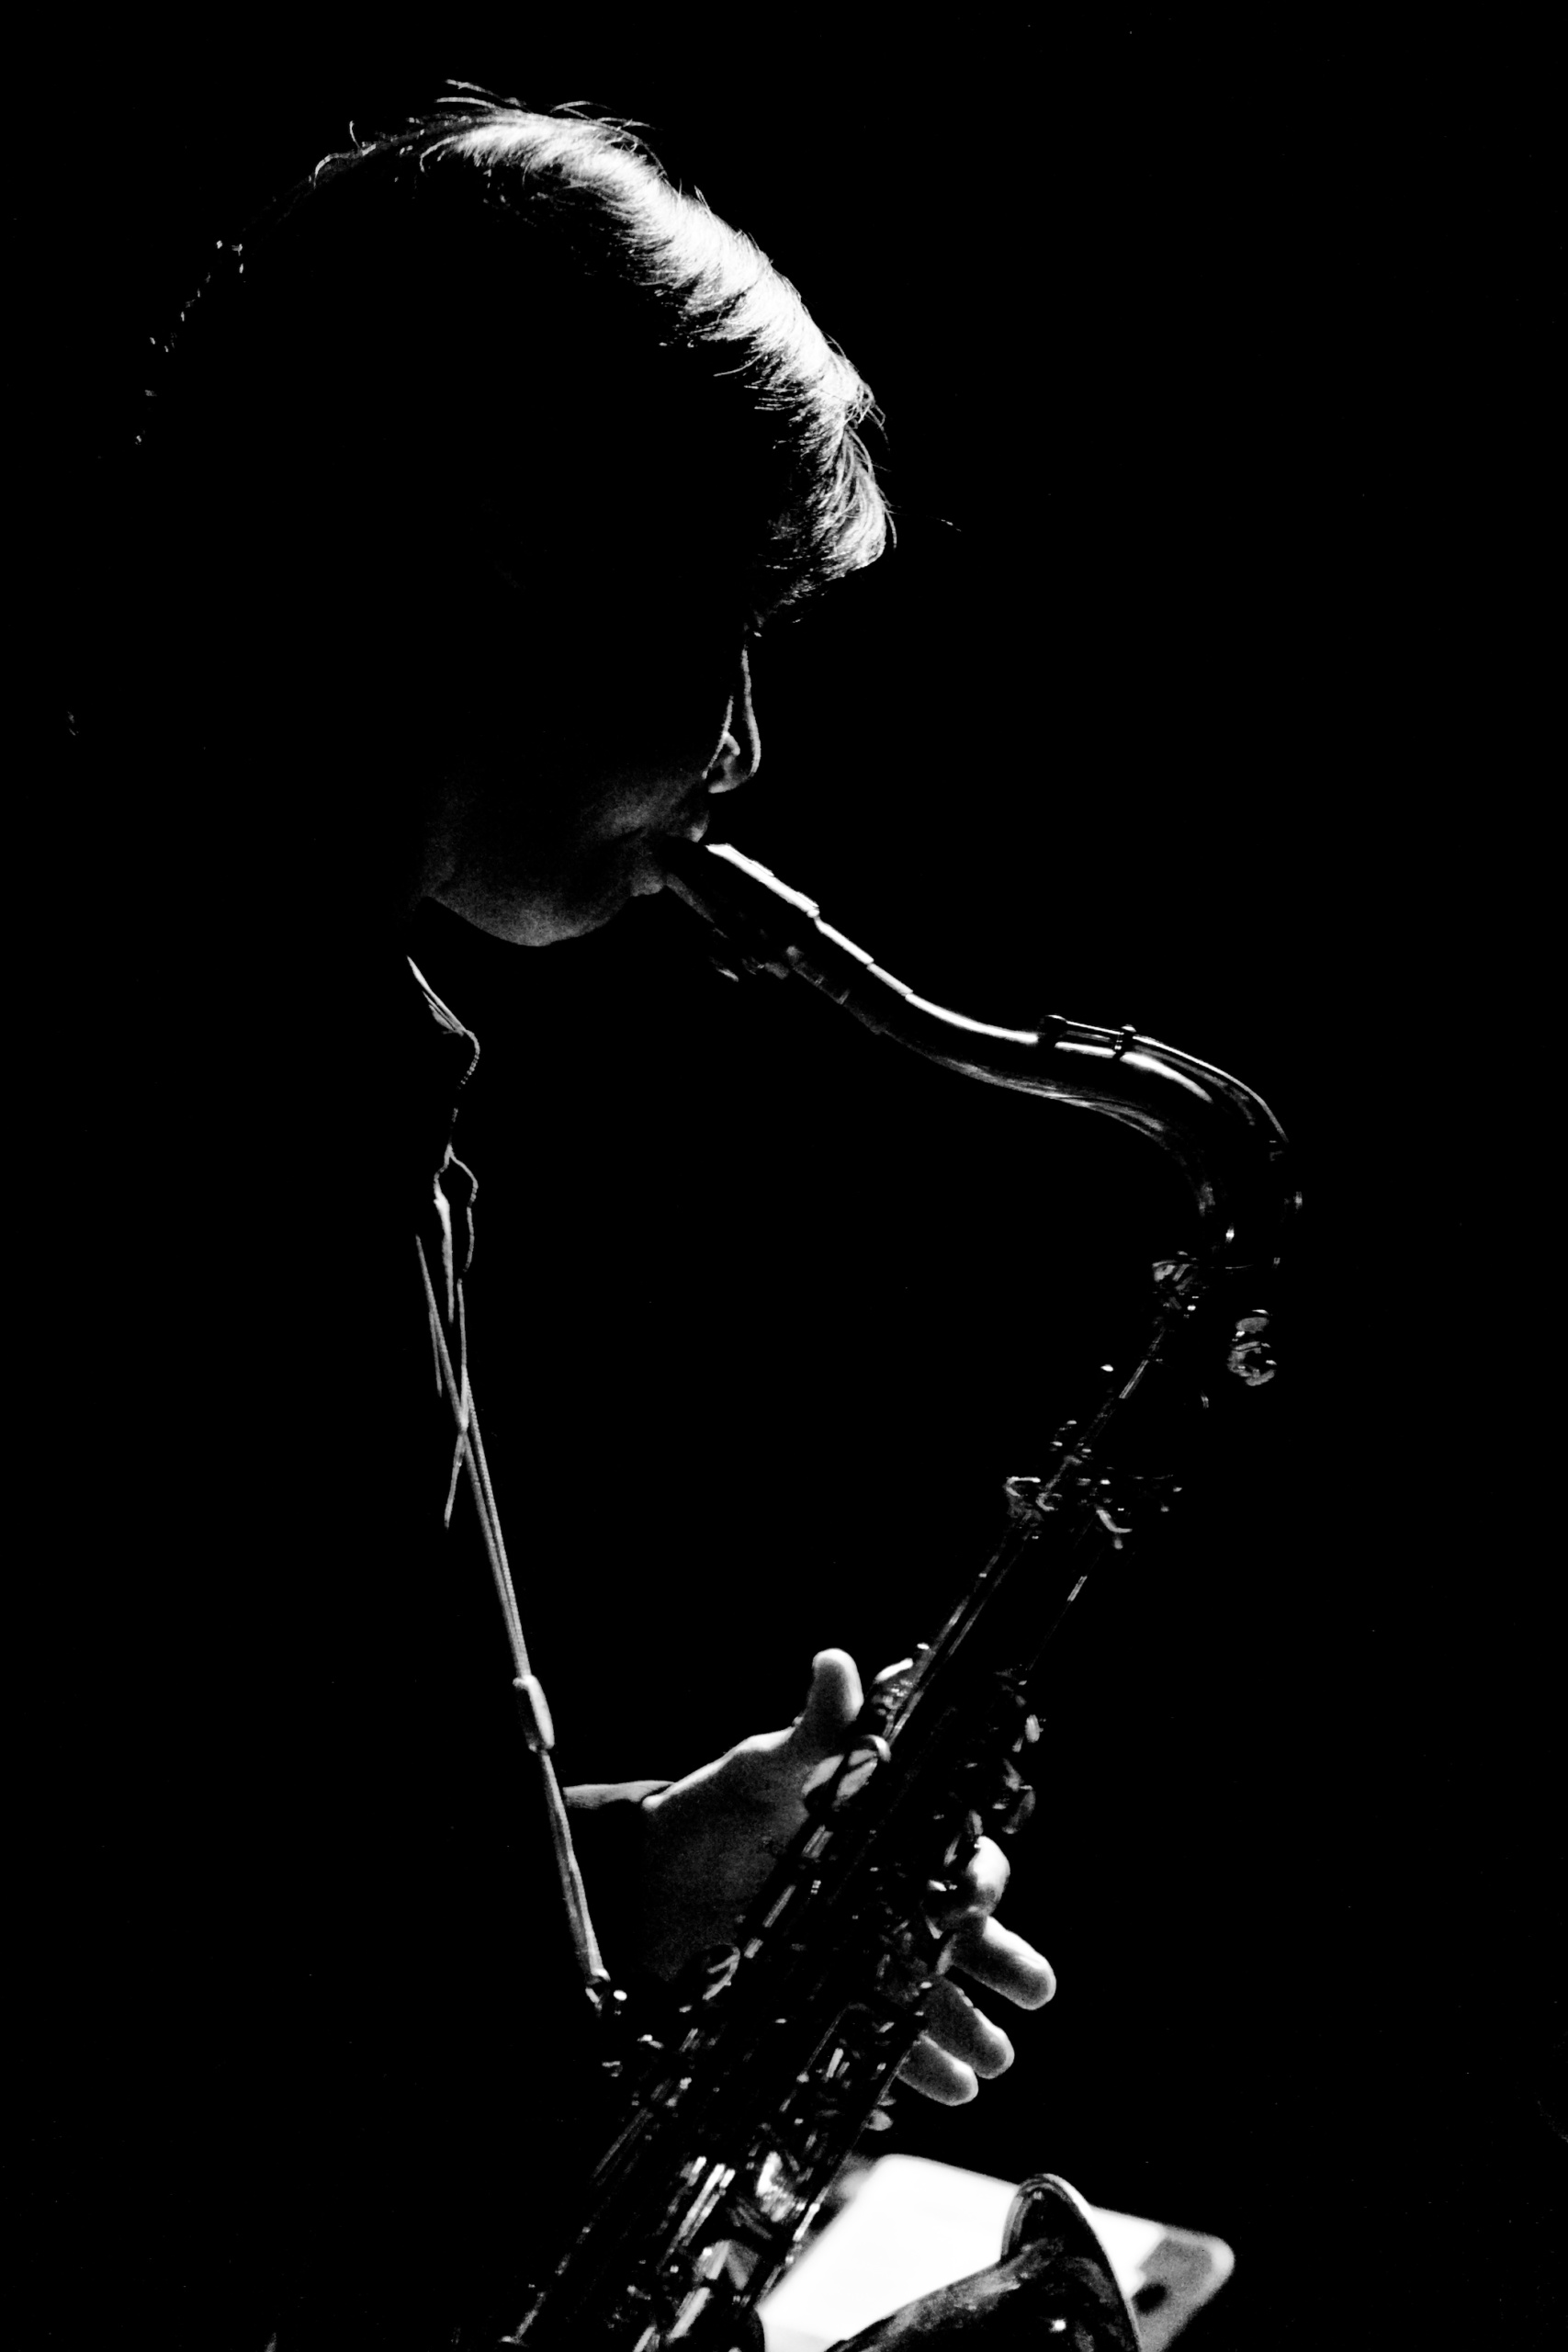 Edmund playing the saxophone